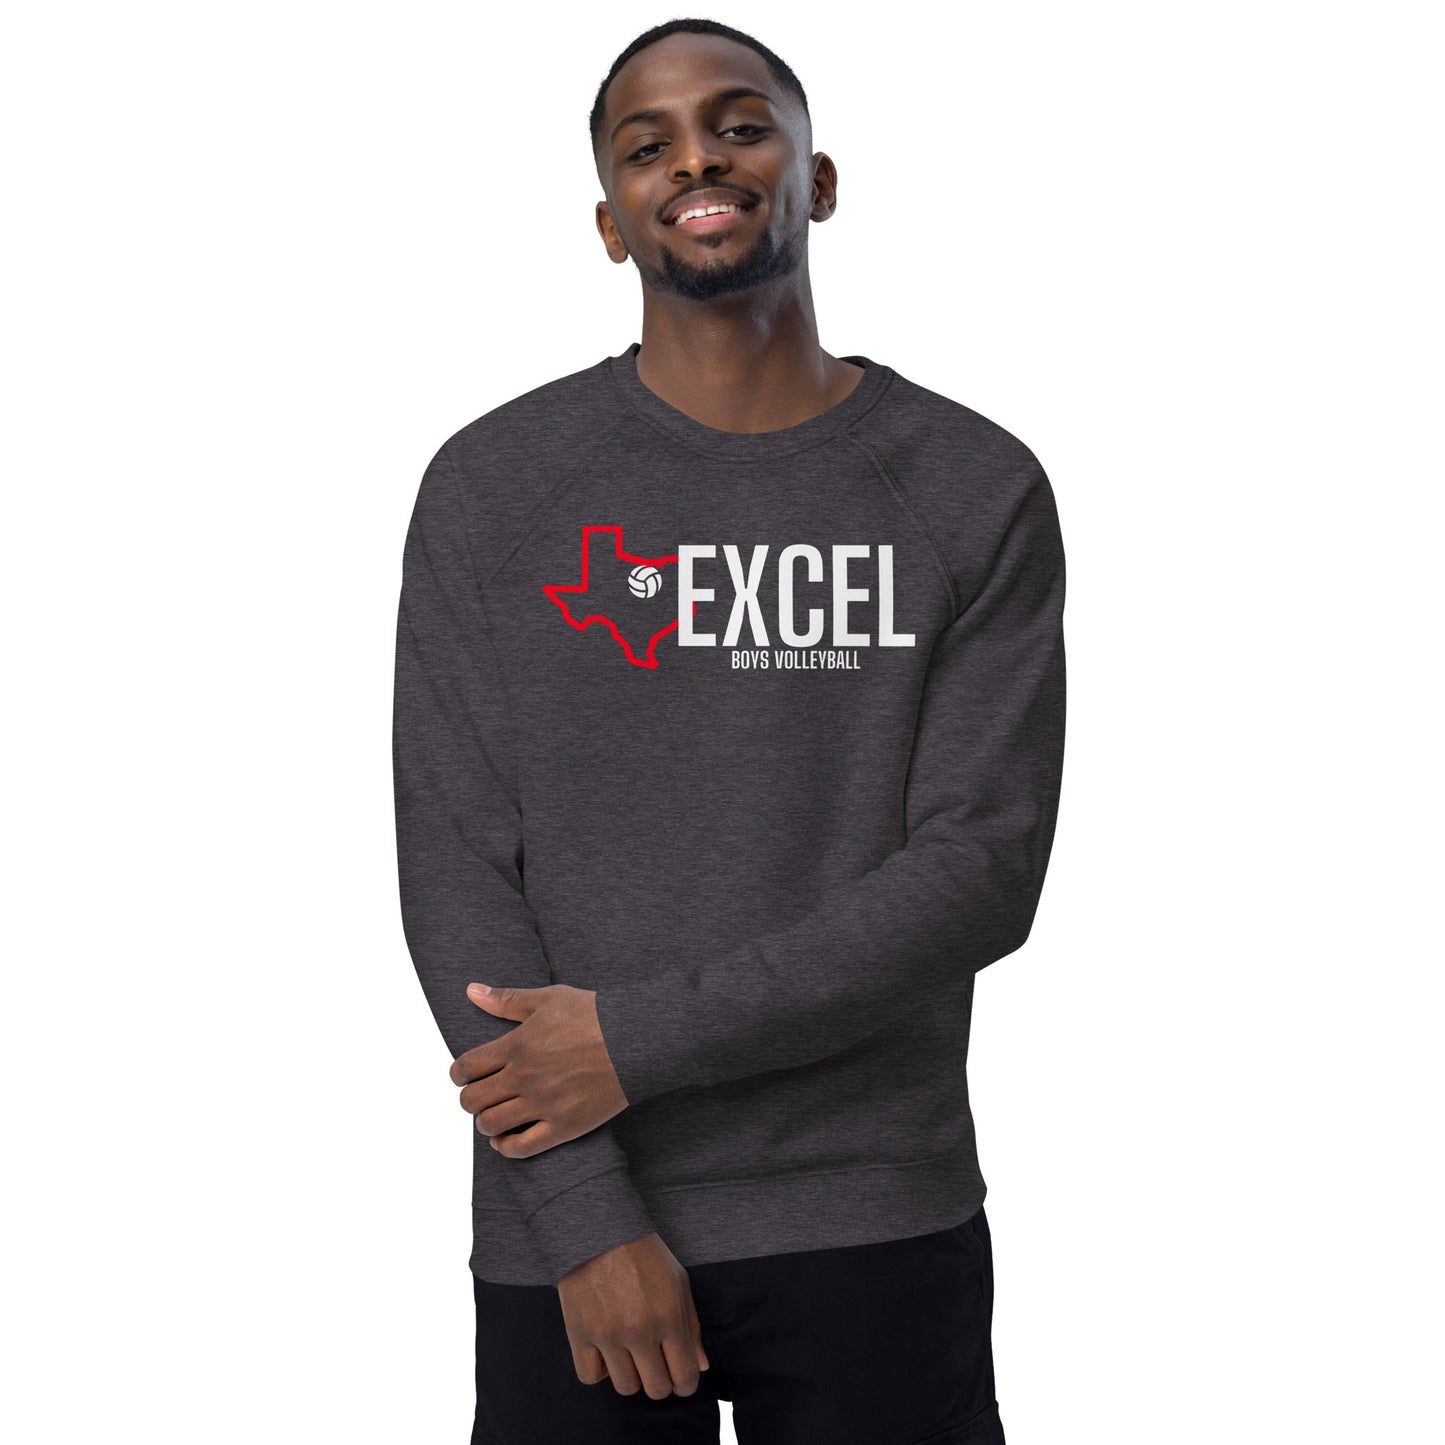 Excel - Boys Volleyball - Unisex organic raglan sweatshirt